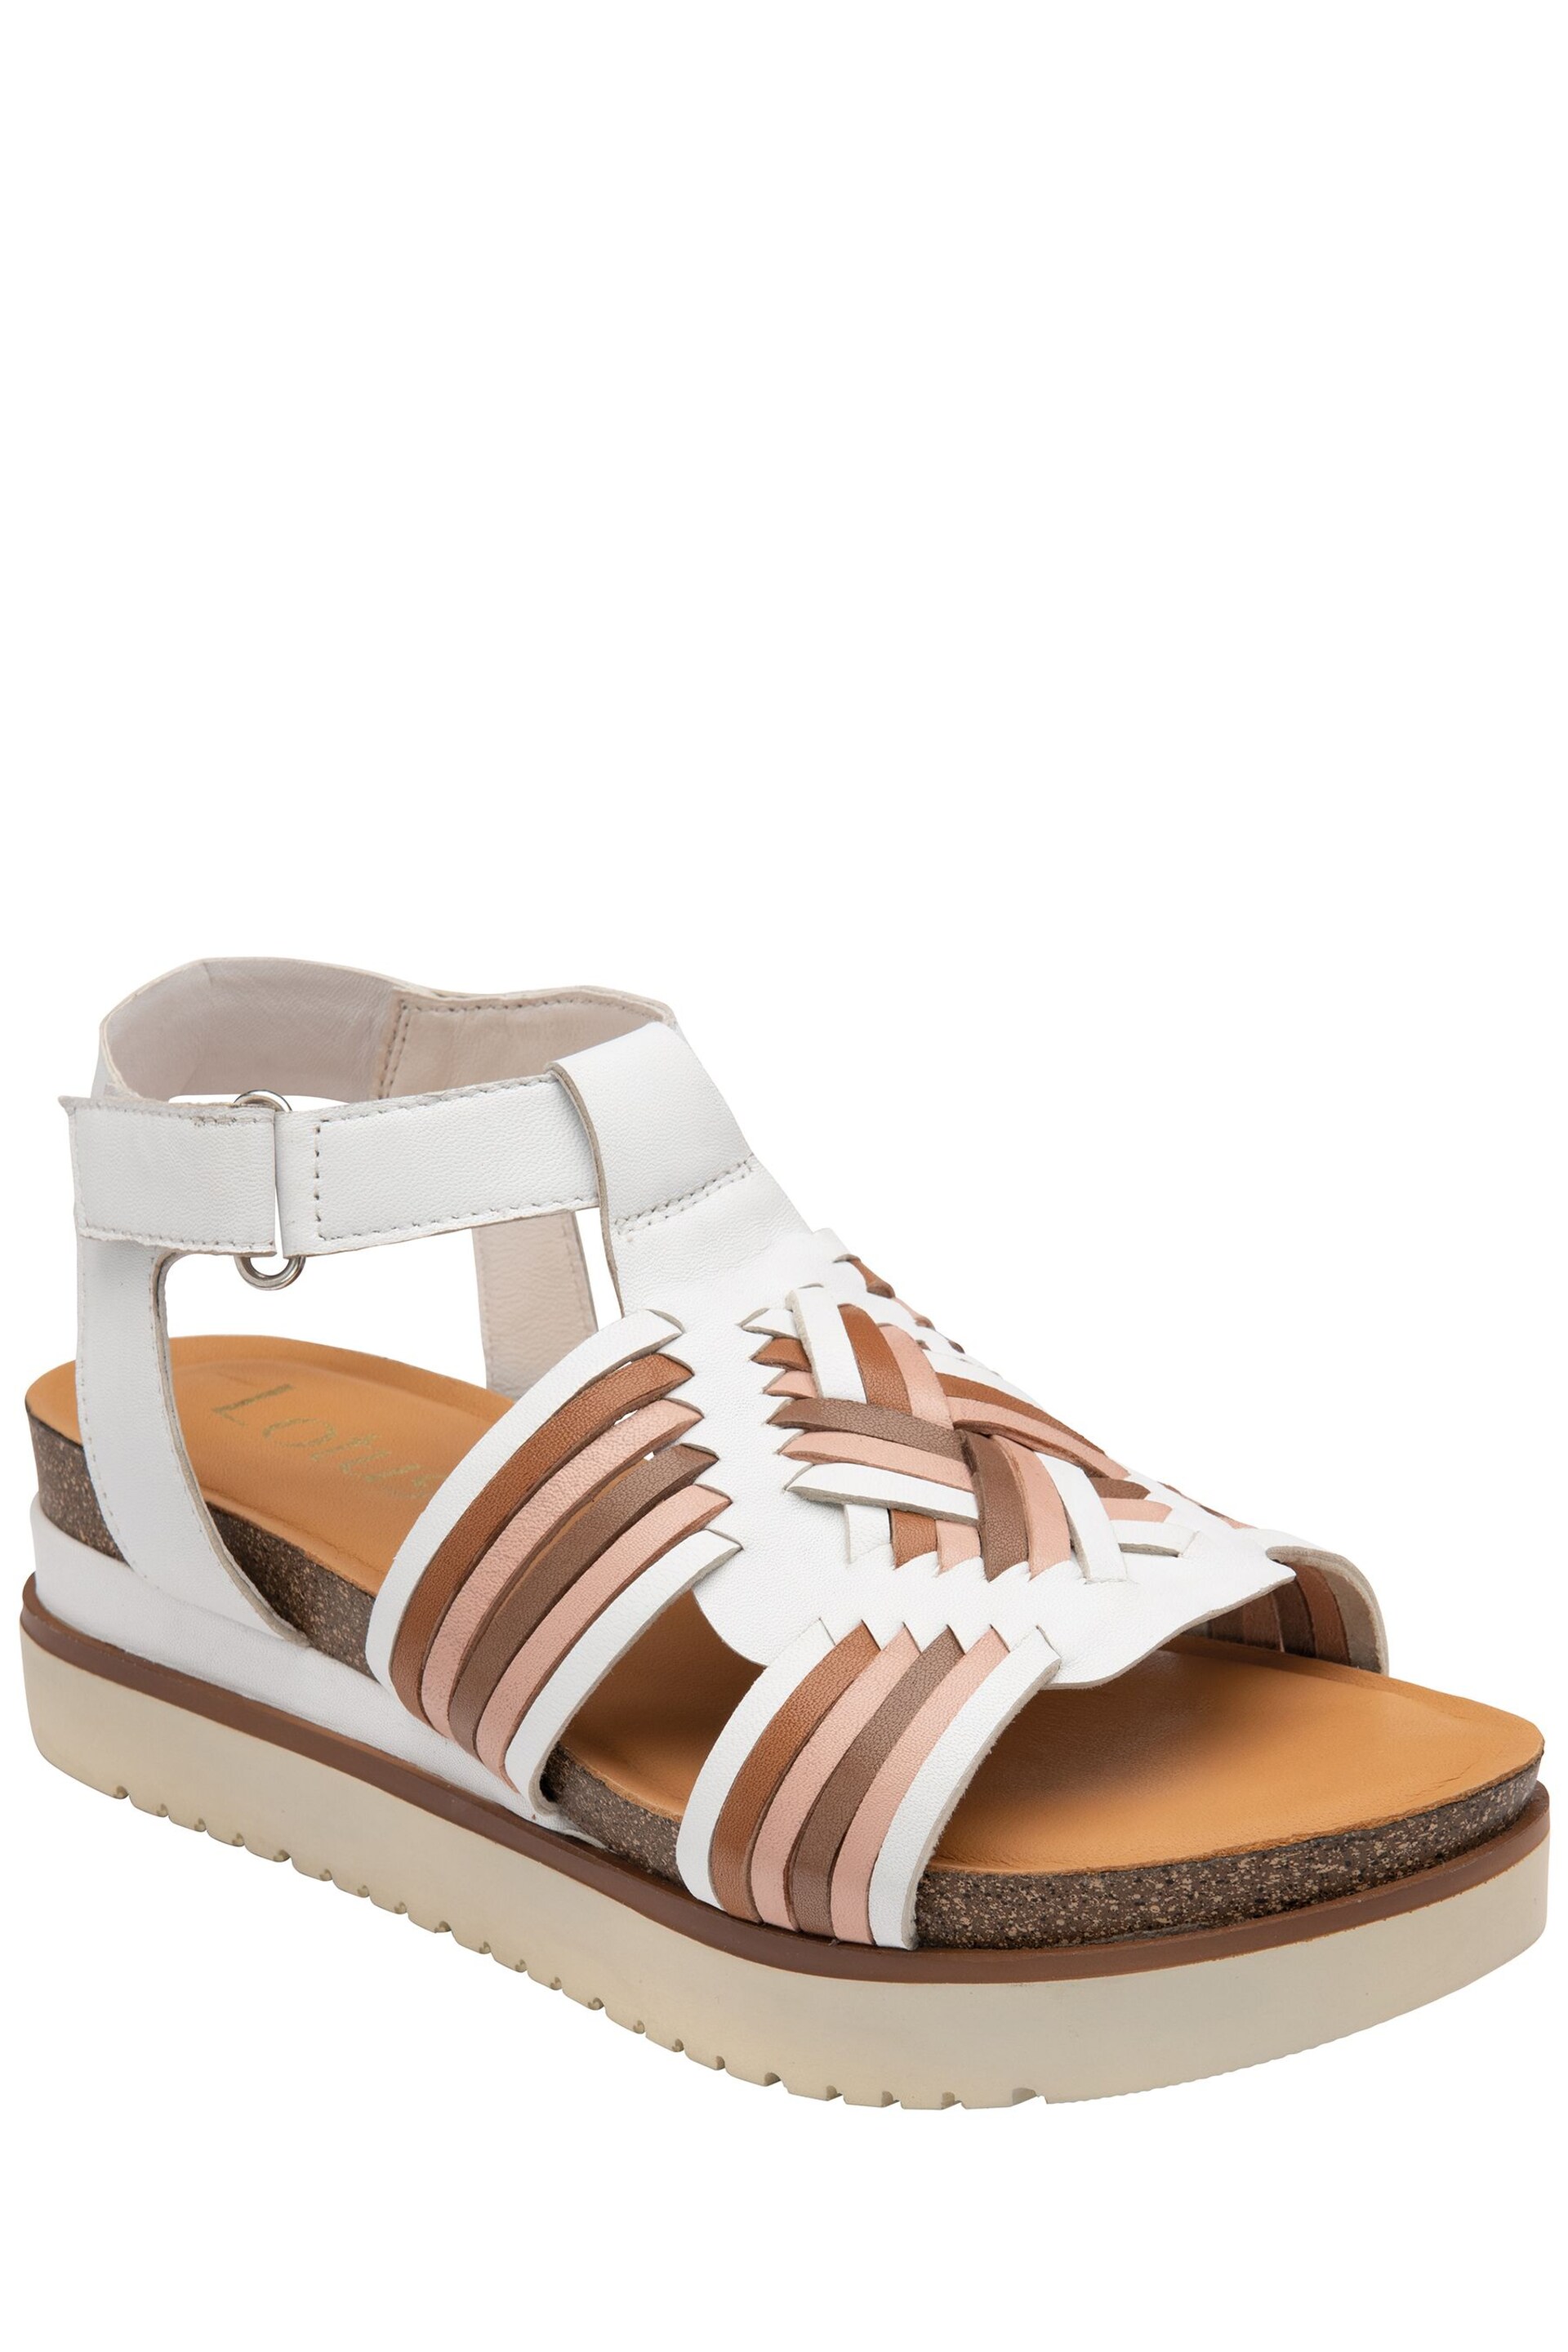 Lotus White Leather Flatform Sandals - Image 1 of 4